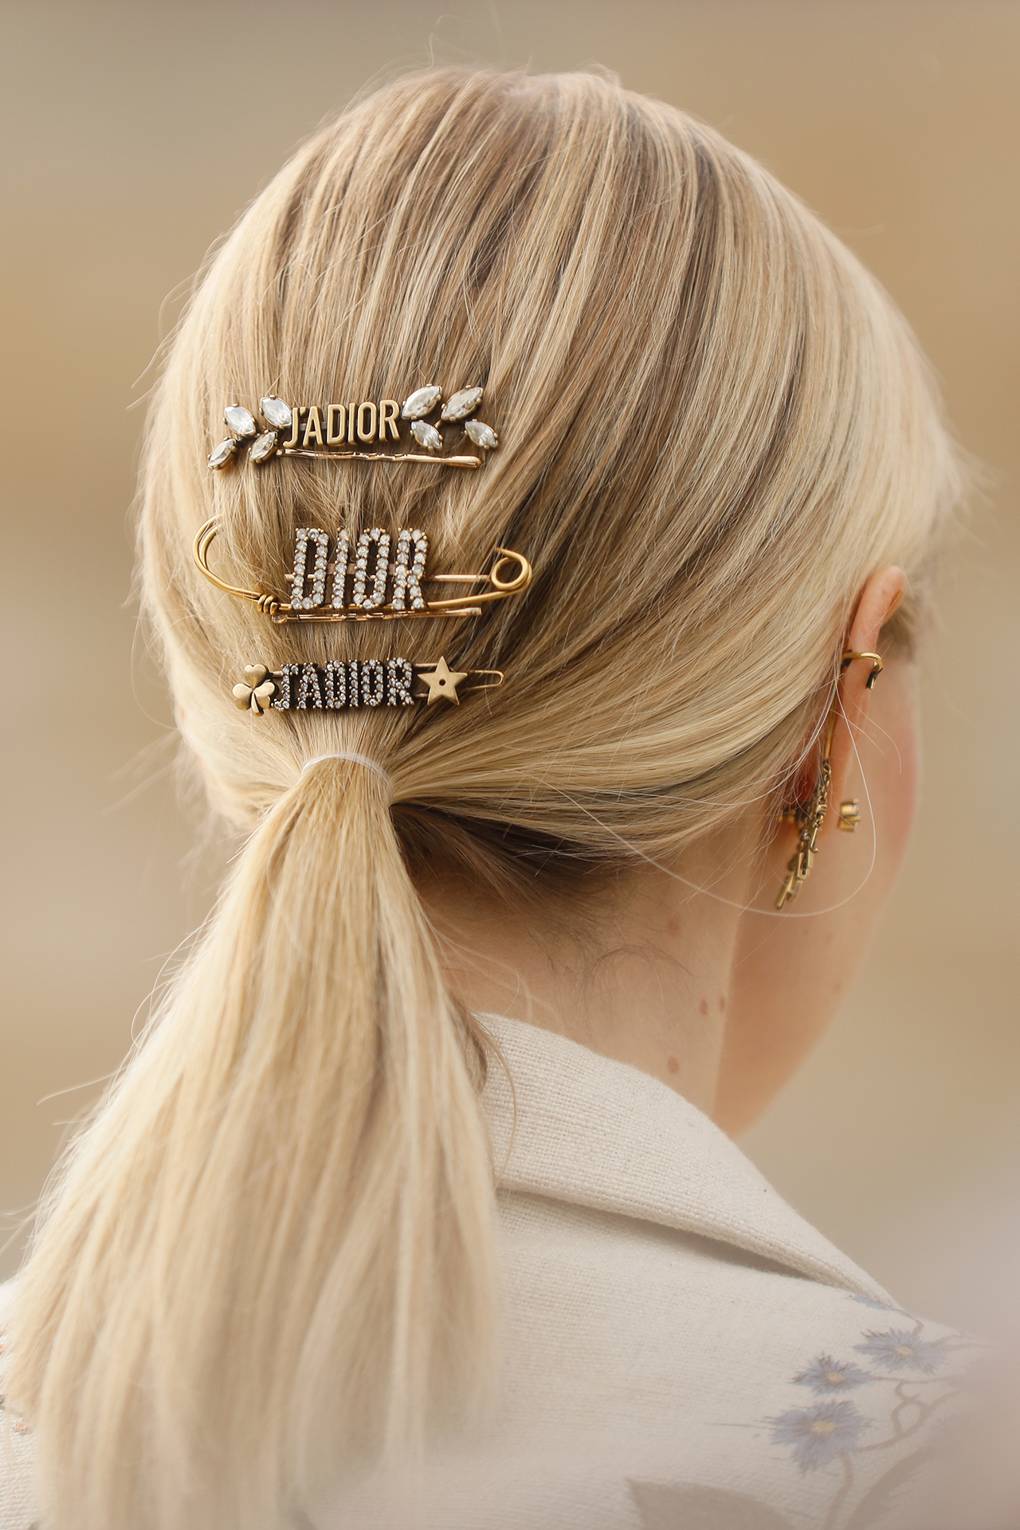 dior hair slide